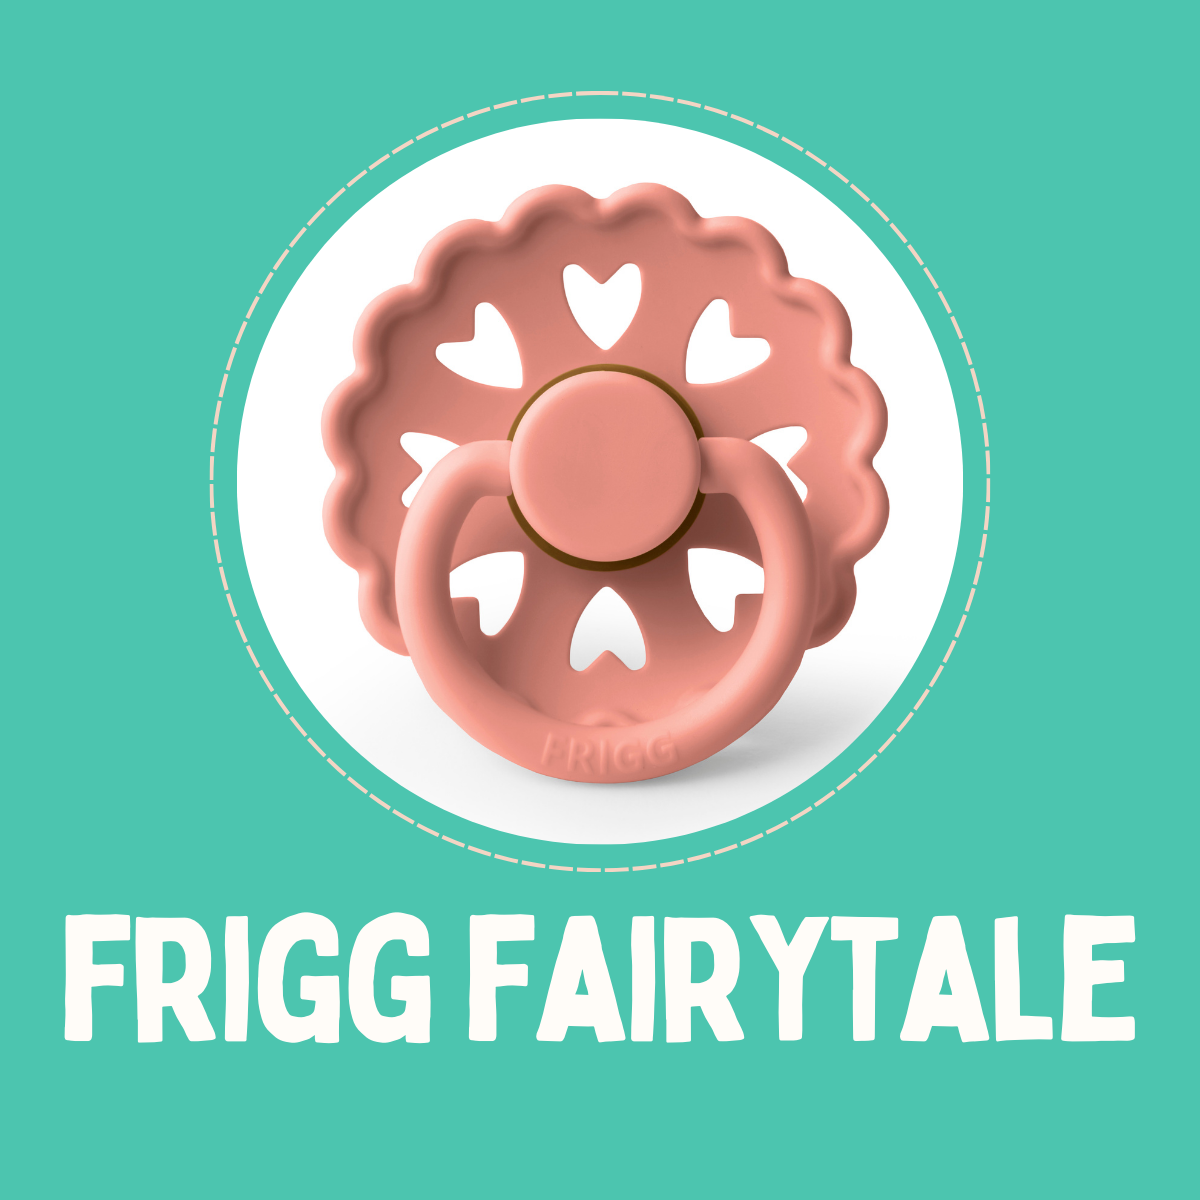 Frigg Fairytale